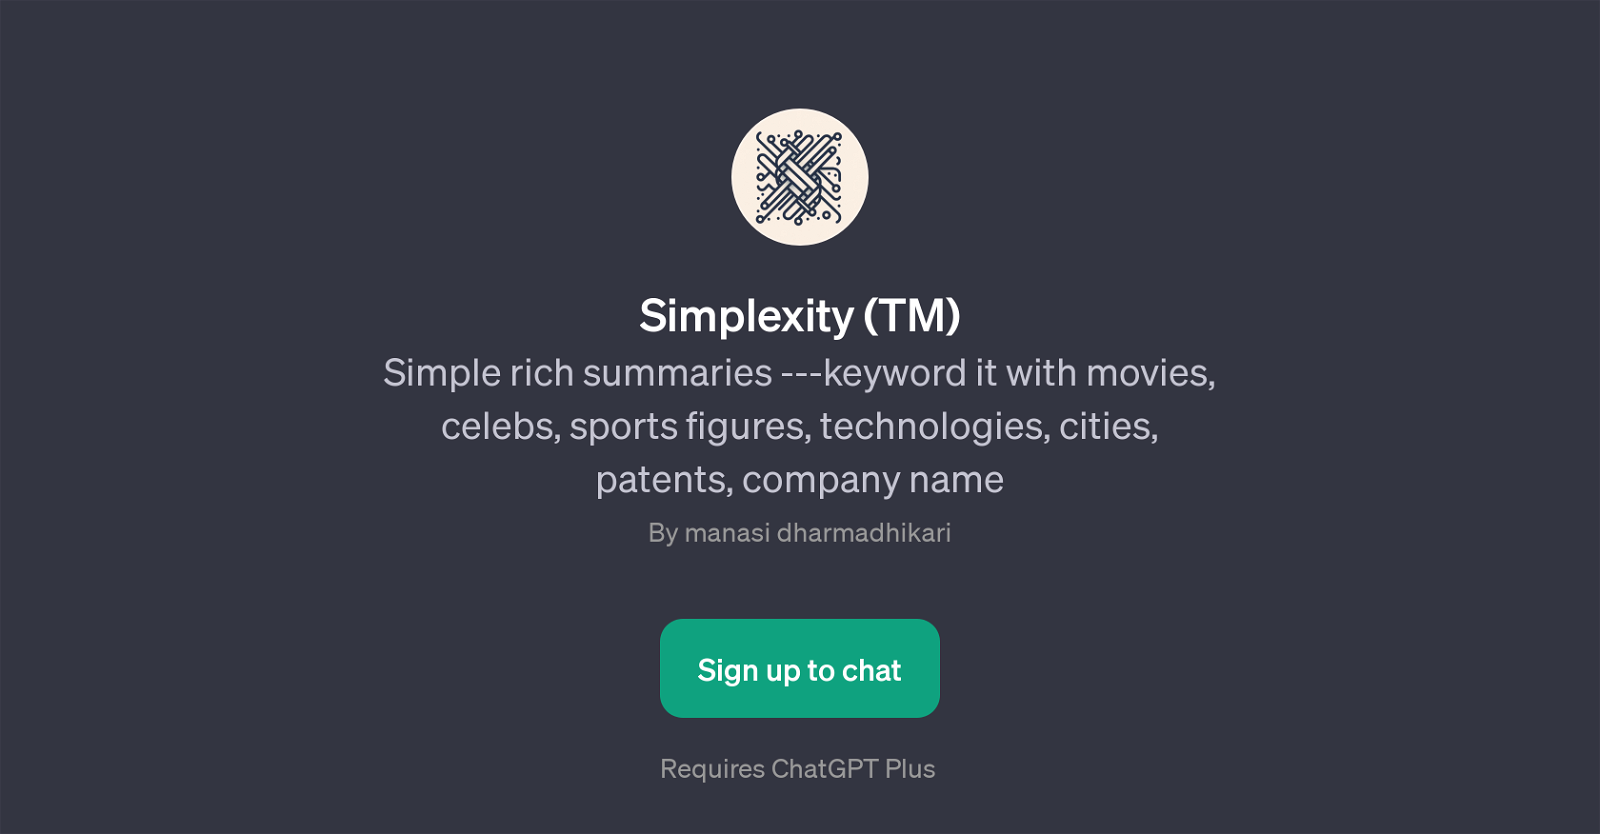 Simplexity (TM) website